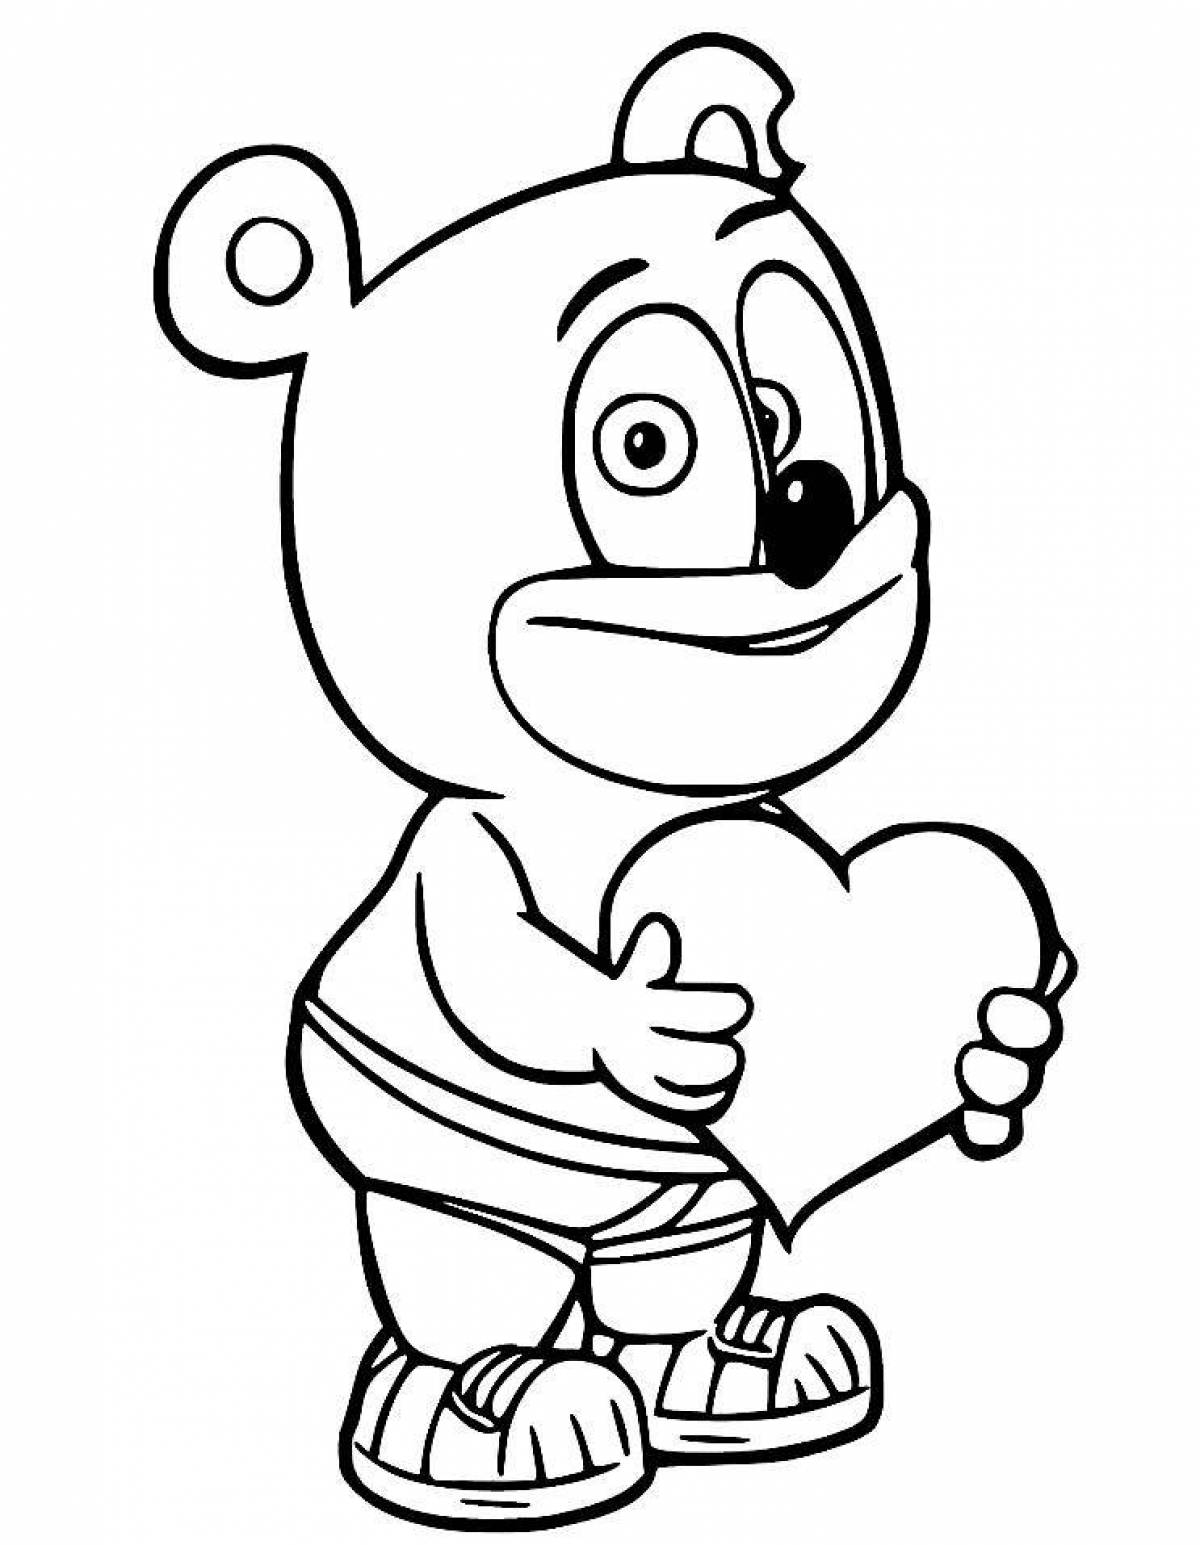 Humber bear coloring page